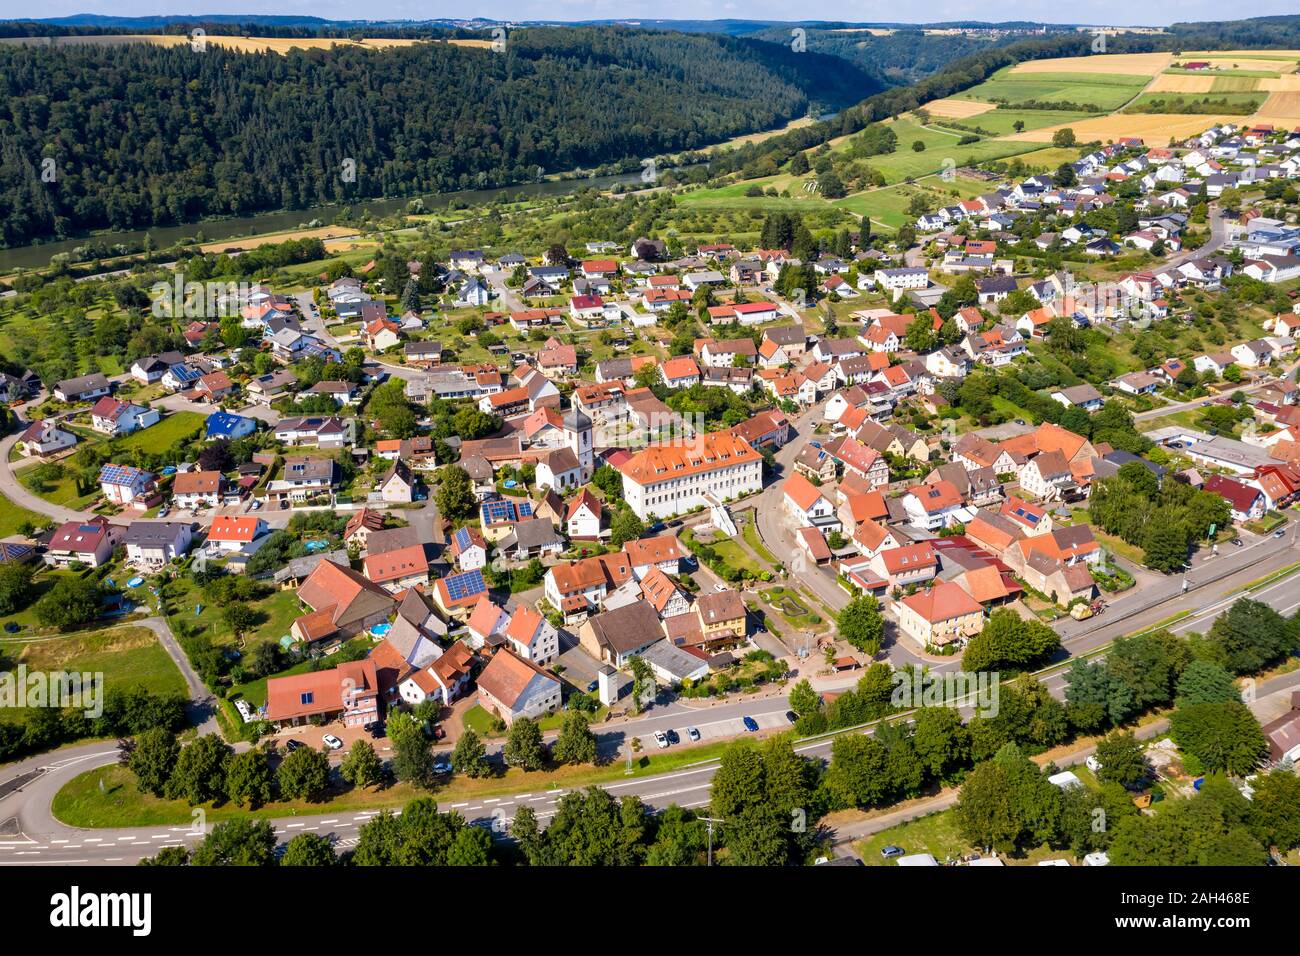 Germany, Bavaria, Binau, Aerial view of countryside town Stock Photo